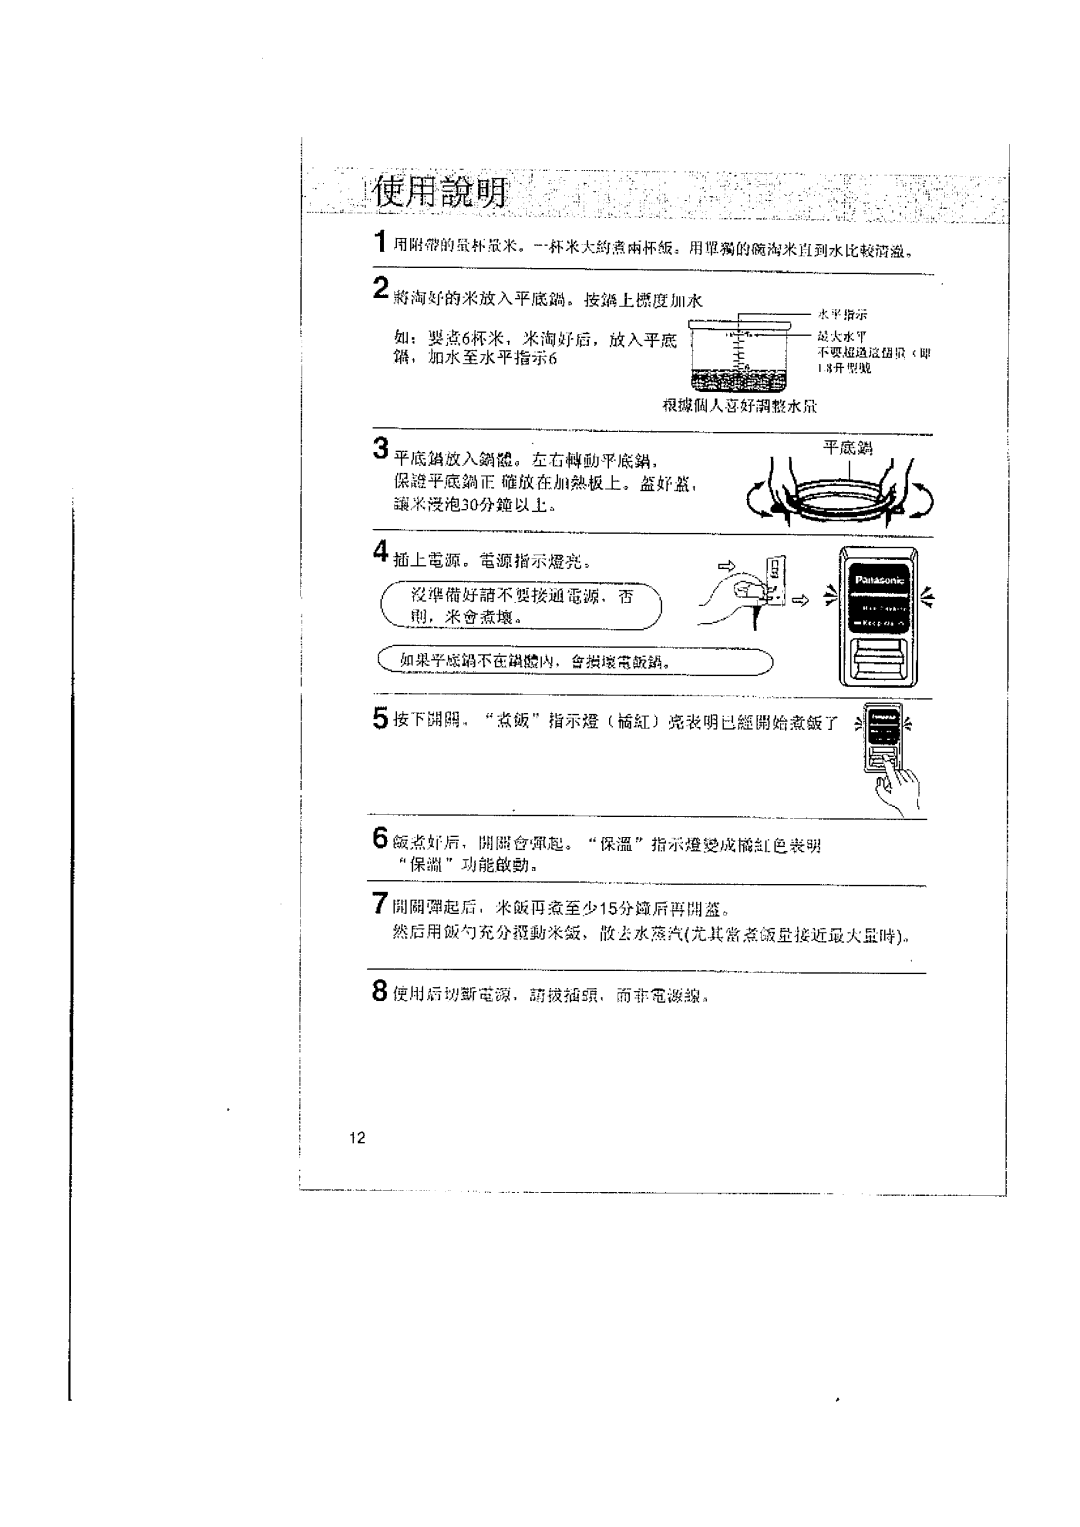 Panasonic SR-W22GS/SR-W18GS manual 